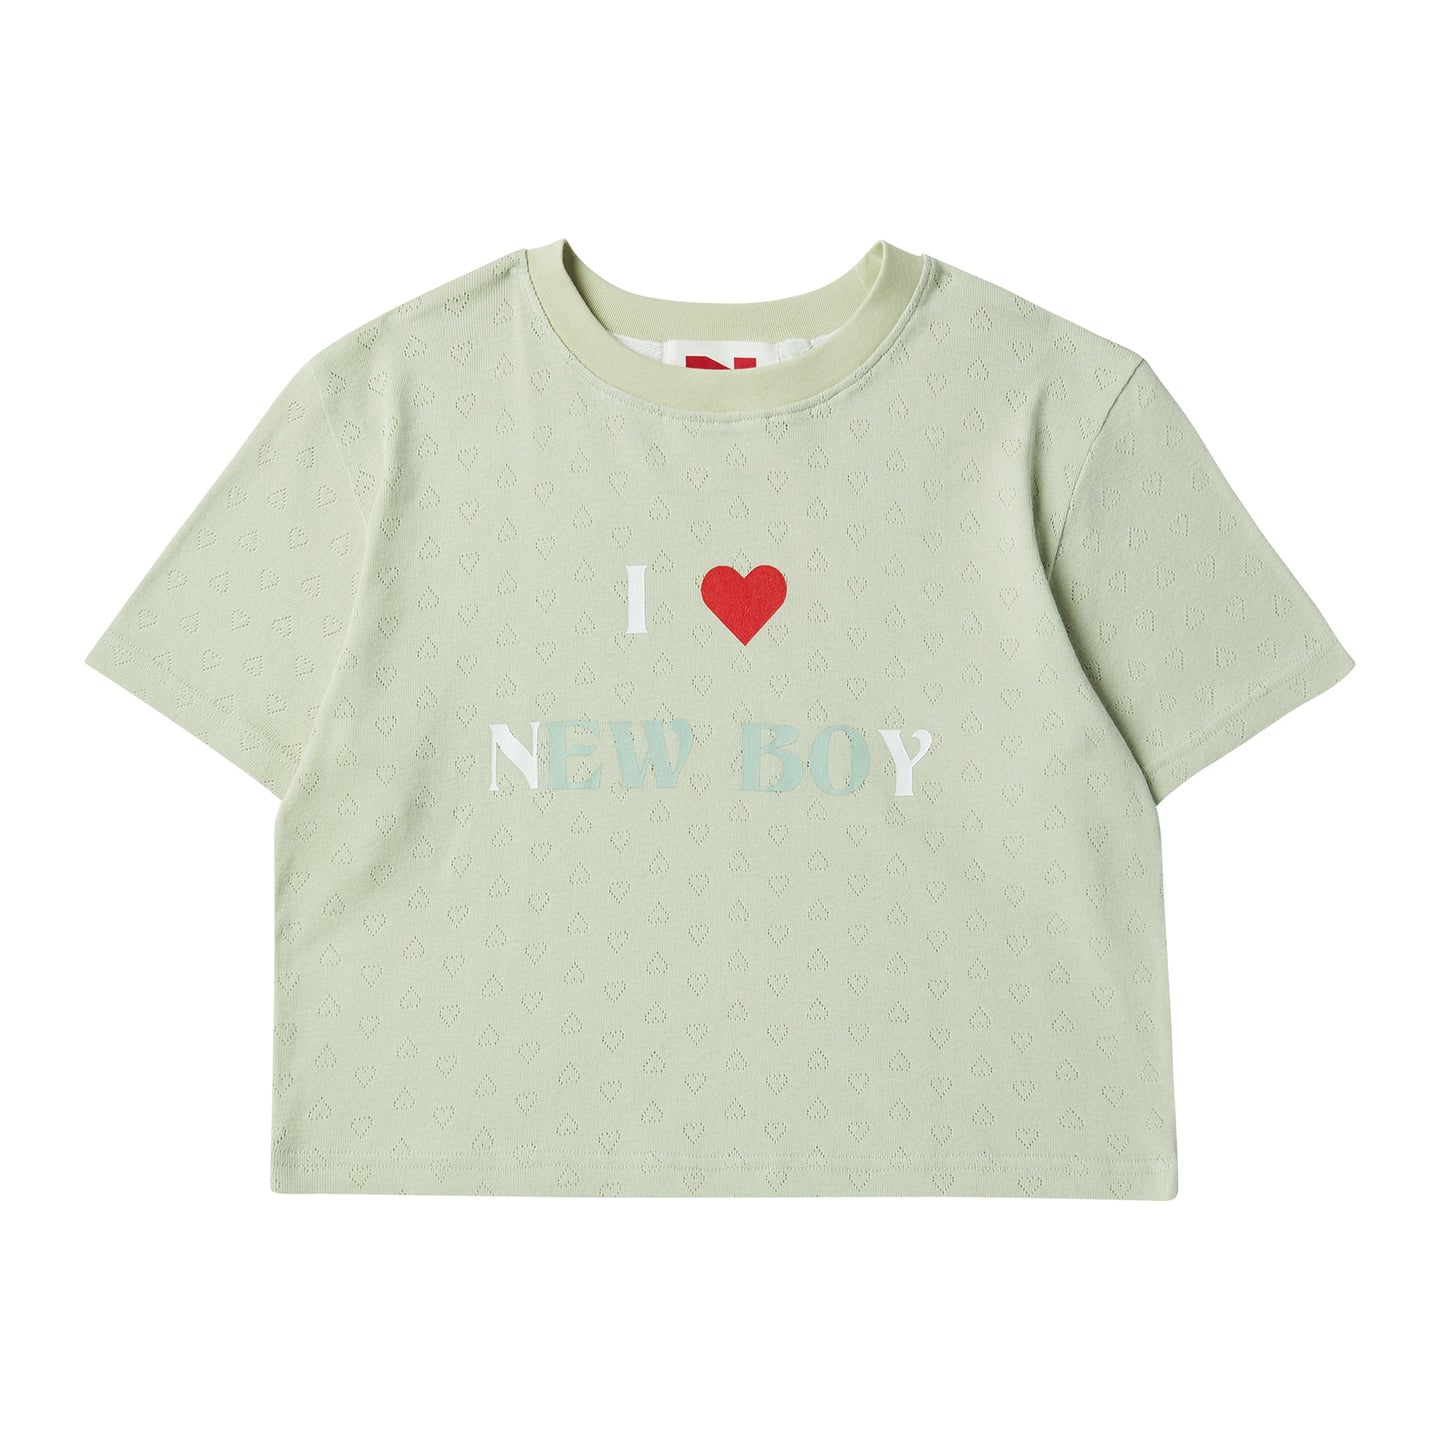 BEYOND CLOSET New Boy 特殊花紋薄荷綠短版T恤